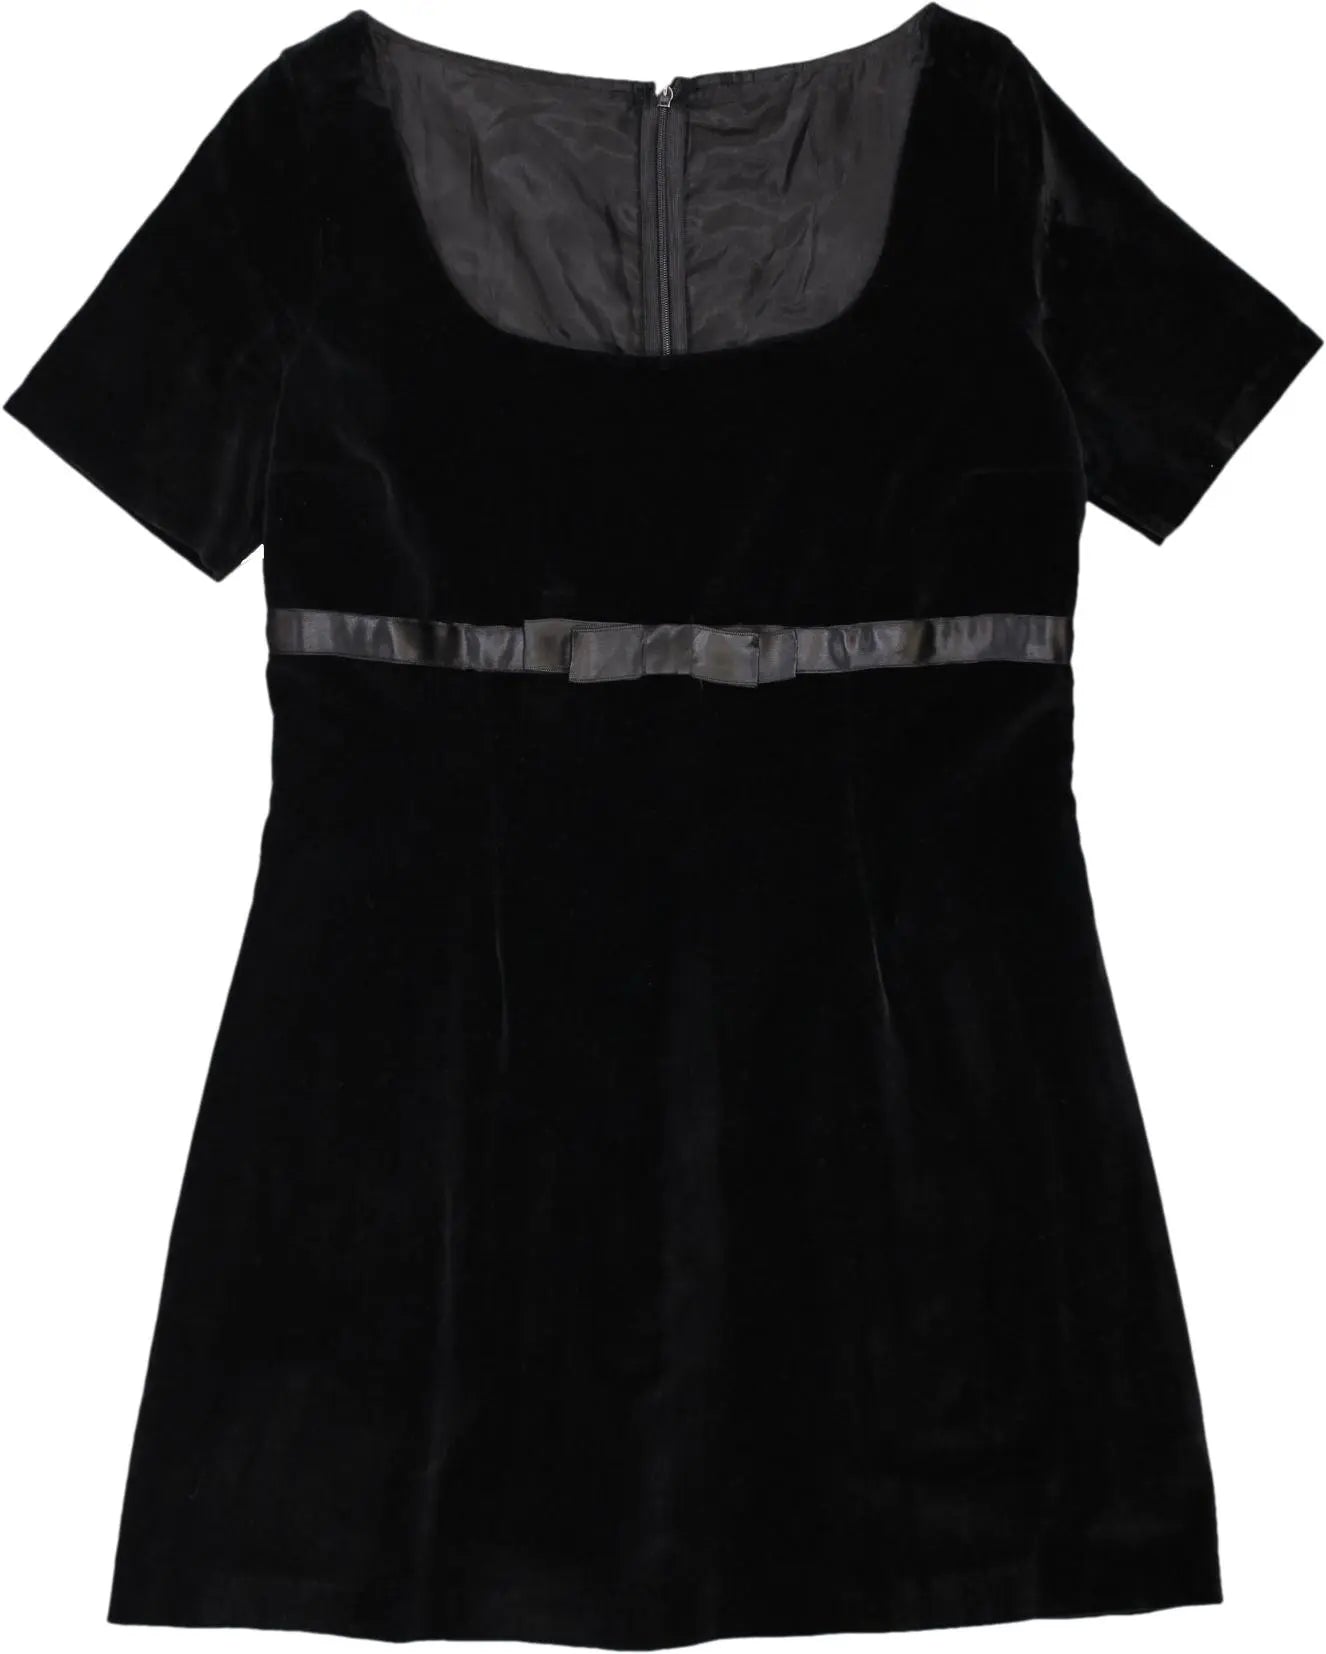 Unknown - Black Velvet Dress- ThriftTale.com - Vintage and second handclothing